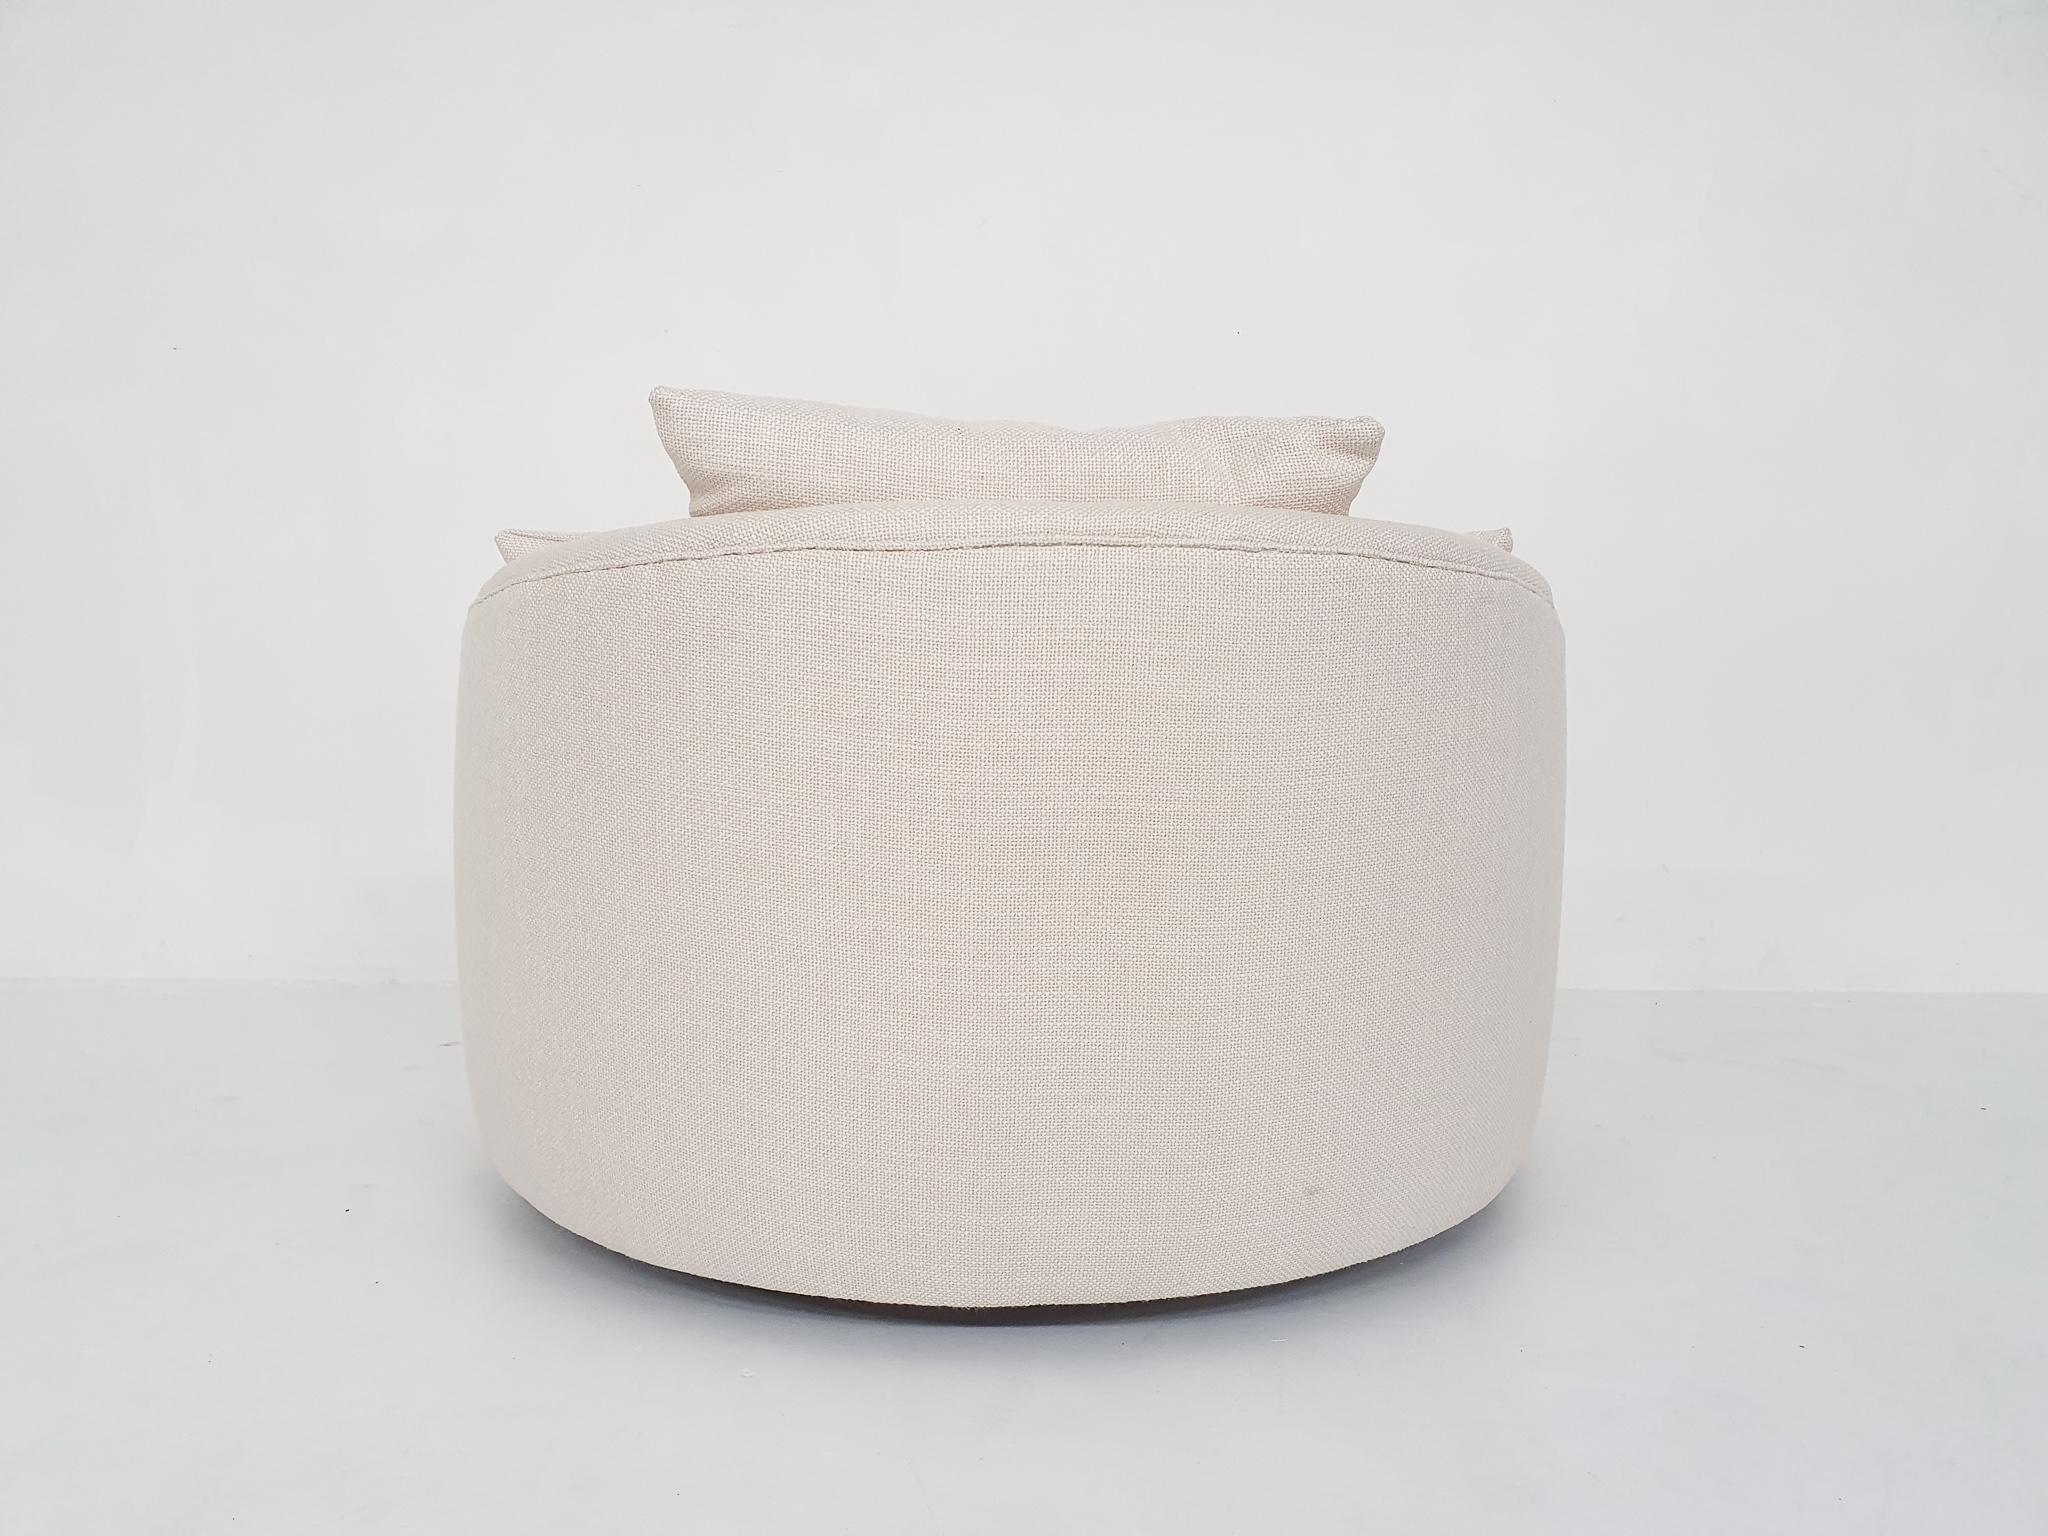 Fabric Authentic 1979 Milo Baughman No 3406 “Tub” Swivel Lounge Chair for Thayer Coggin